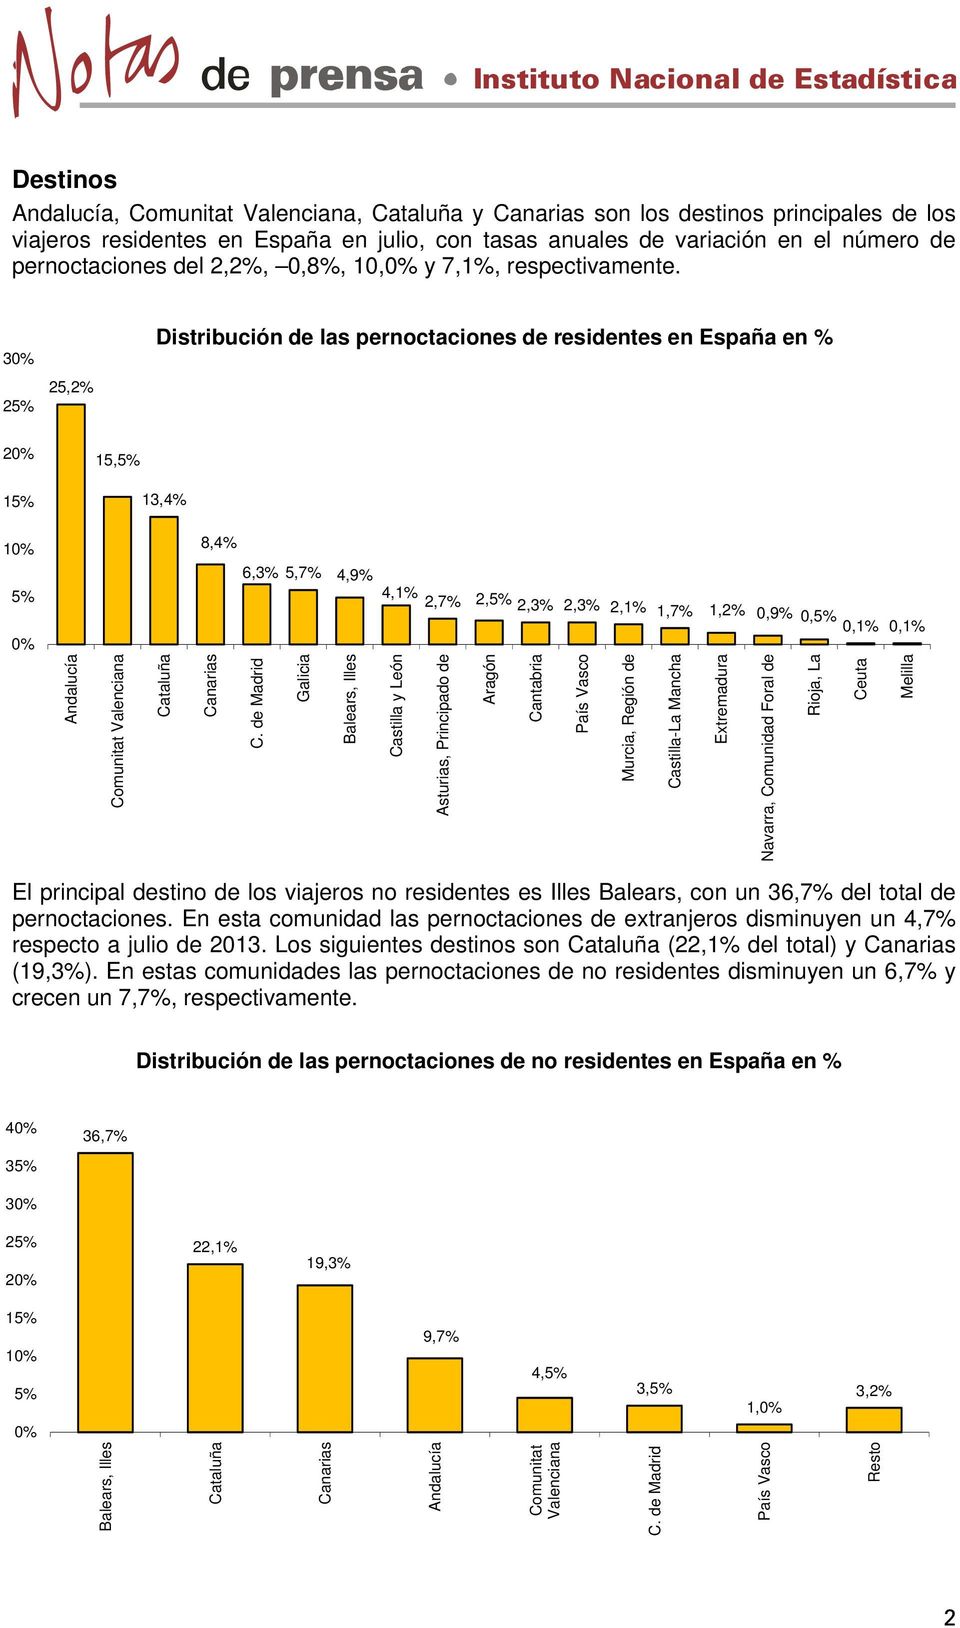 3% 25% 25,2% Distribución de las pernoctaciones de residentes en España en % 2% 15,5% 15% 13,4% 1% 8,4% 5% 6,3% 5,7% 4,9% 4,1% 2,7% 2,5% 2,3% 2,3% 2,1% 1,7% 1,2%,9%,5% %,1%,1% Andalucía Comunitat